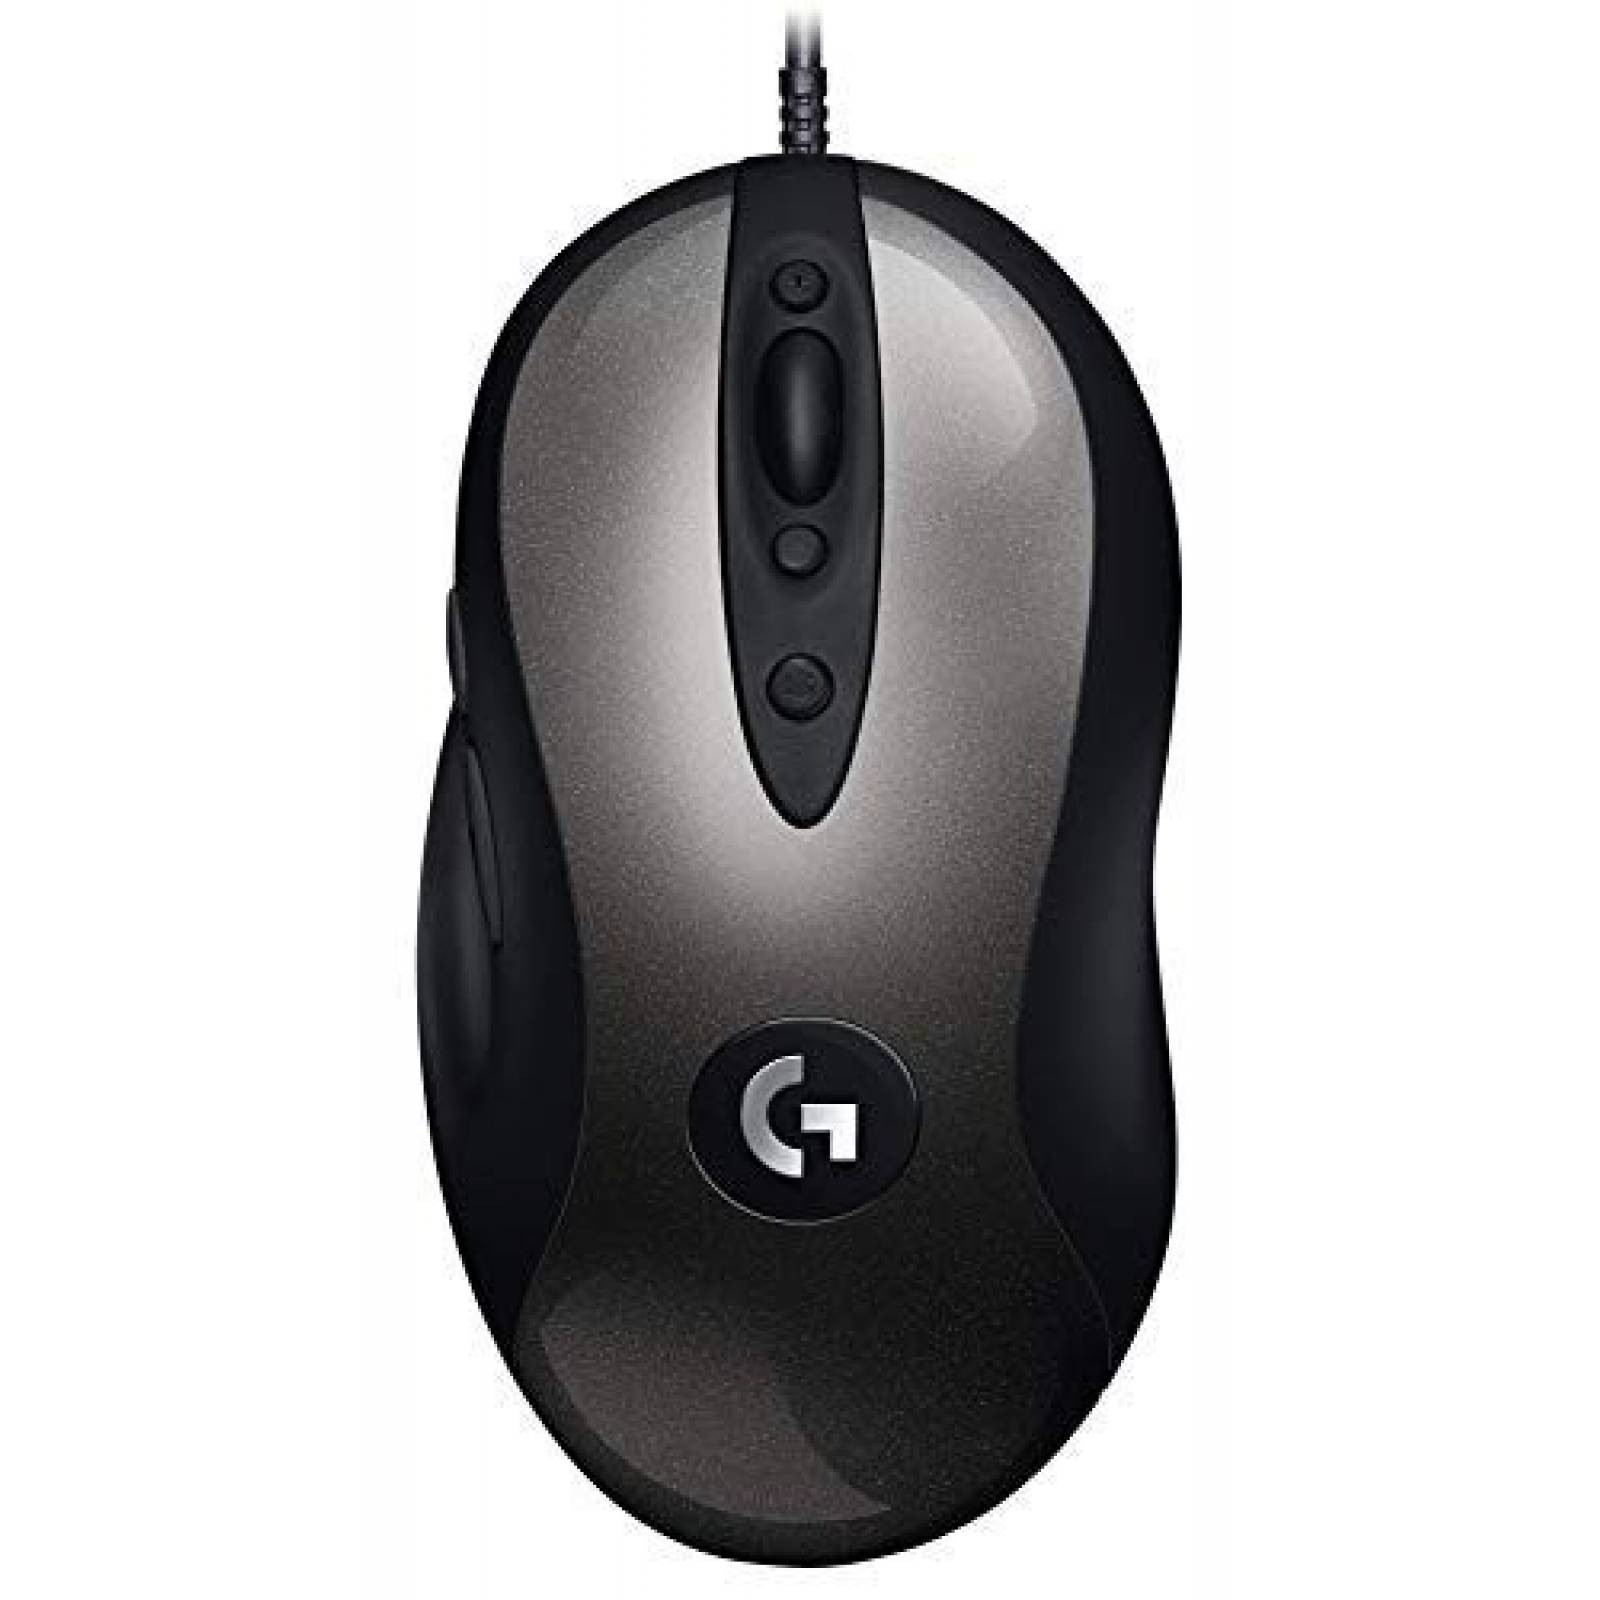 Mouse Gamer Logitech G MX518 16,000 DPI 8 Botones